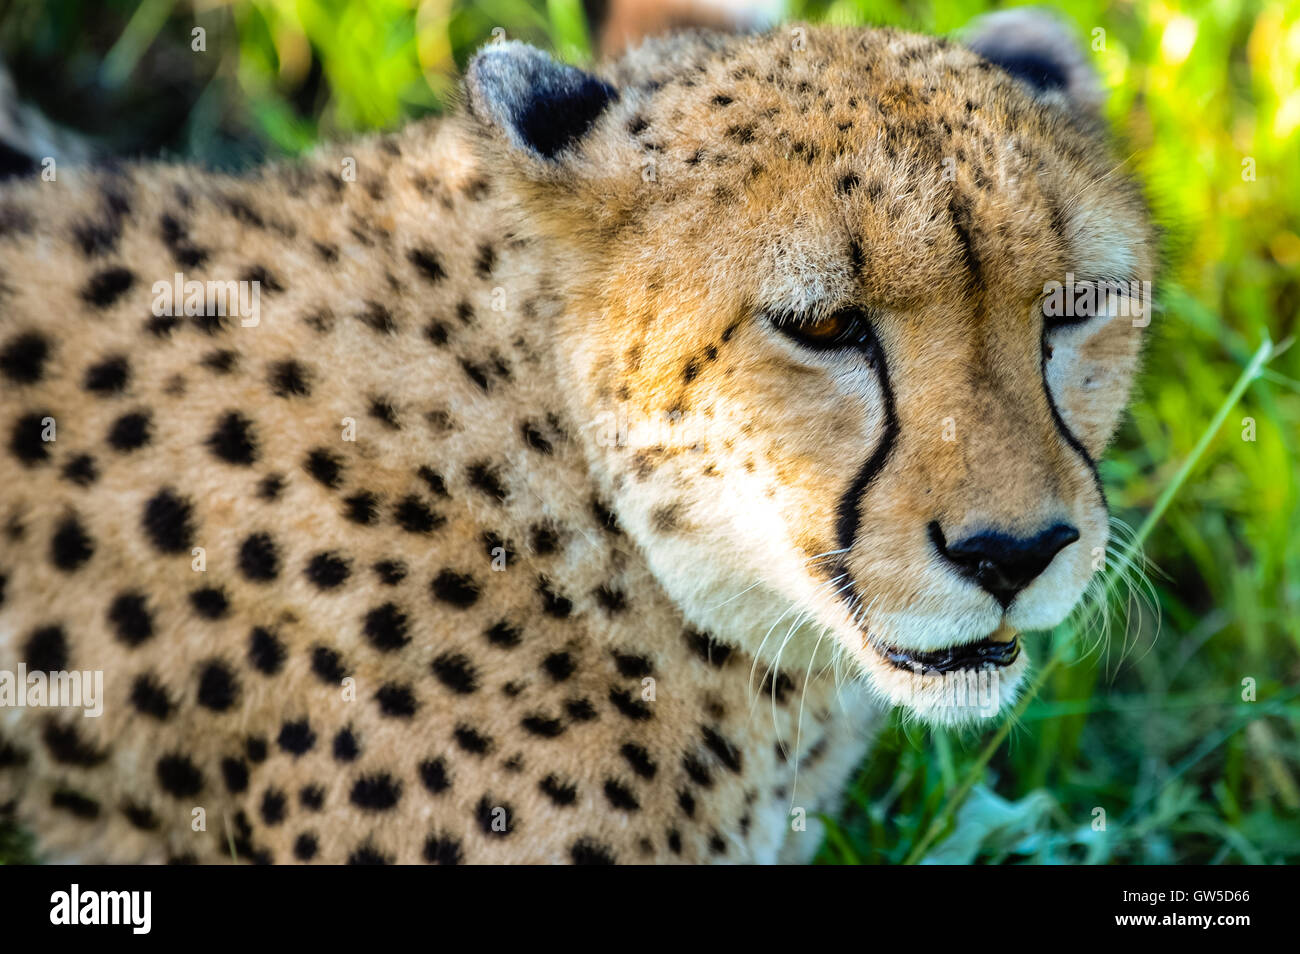 Gepard am Emdoneni Katze Rehabilitationszentrum in Südafrika, welche für wilde Katzen sorgen soll. Stockfoto